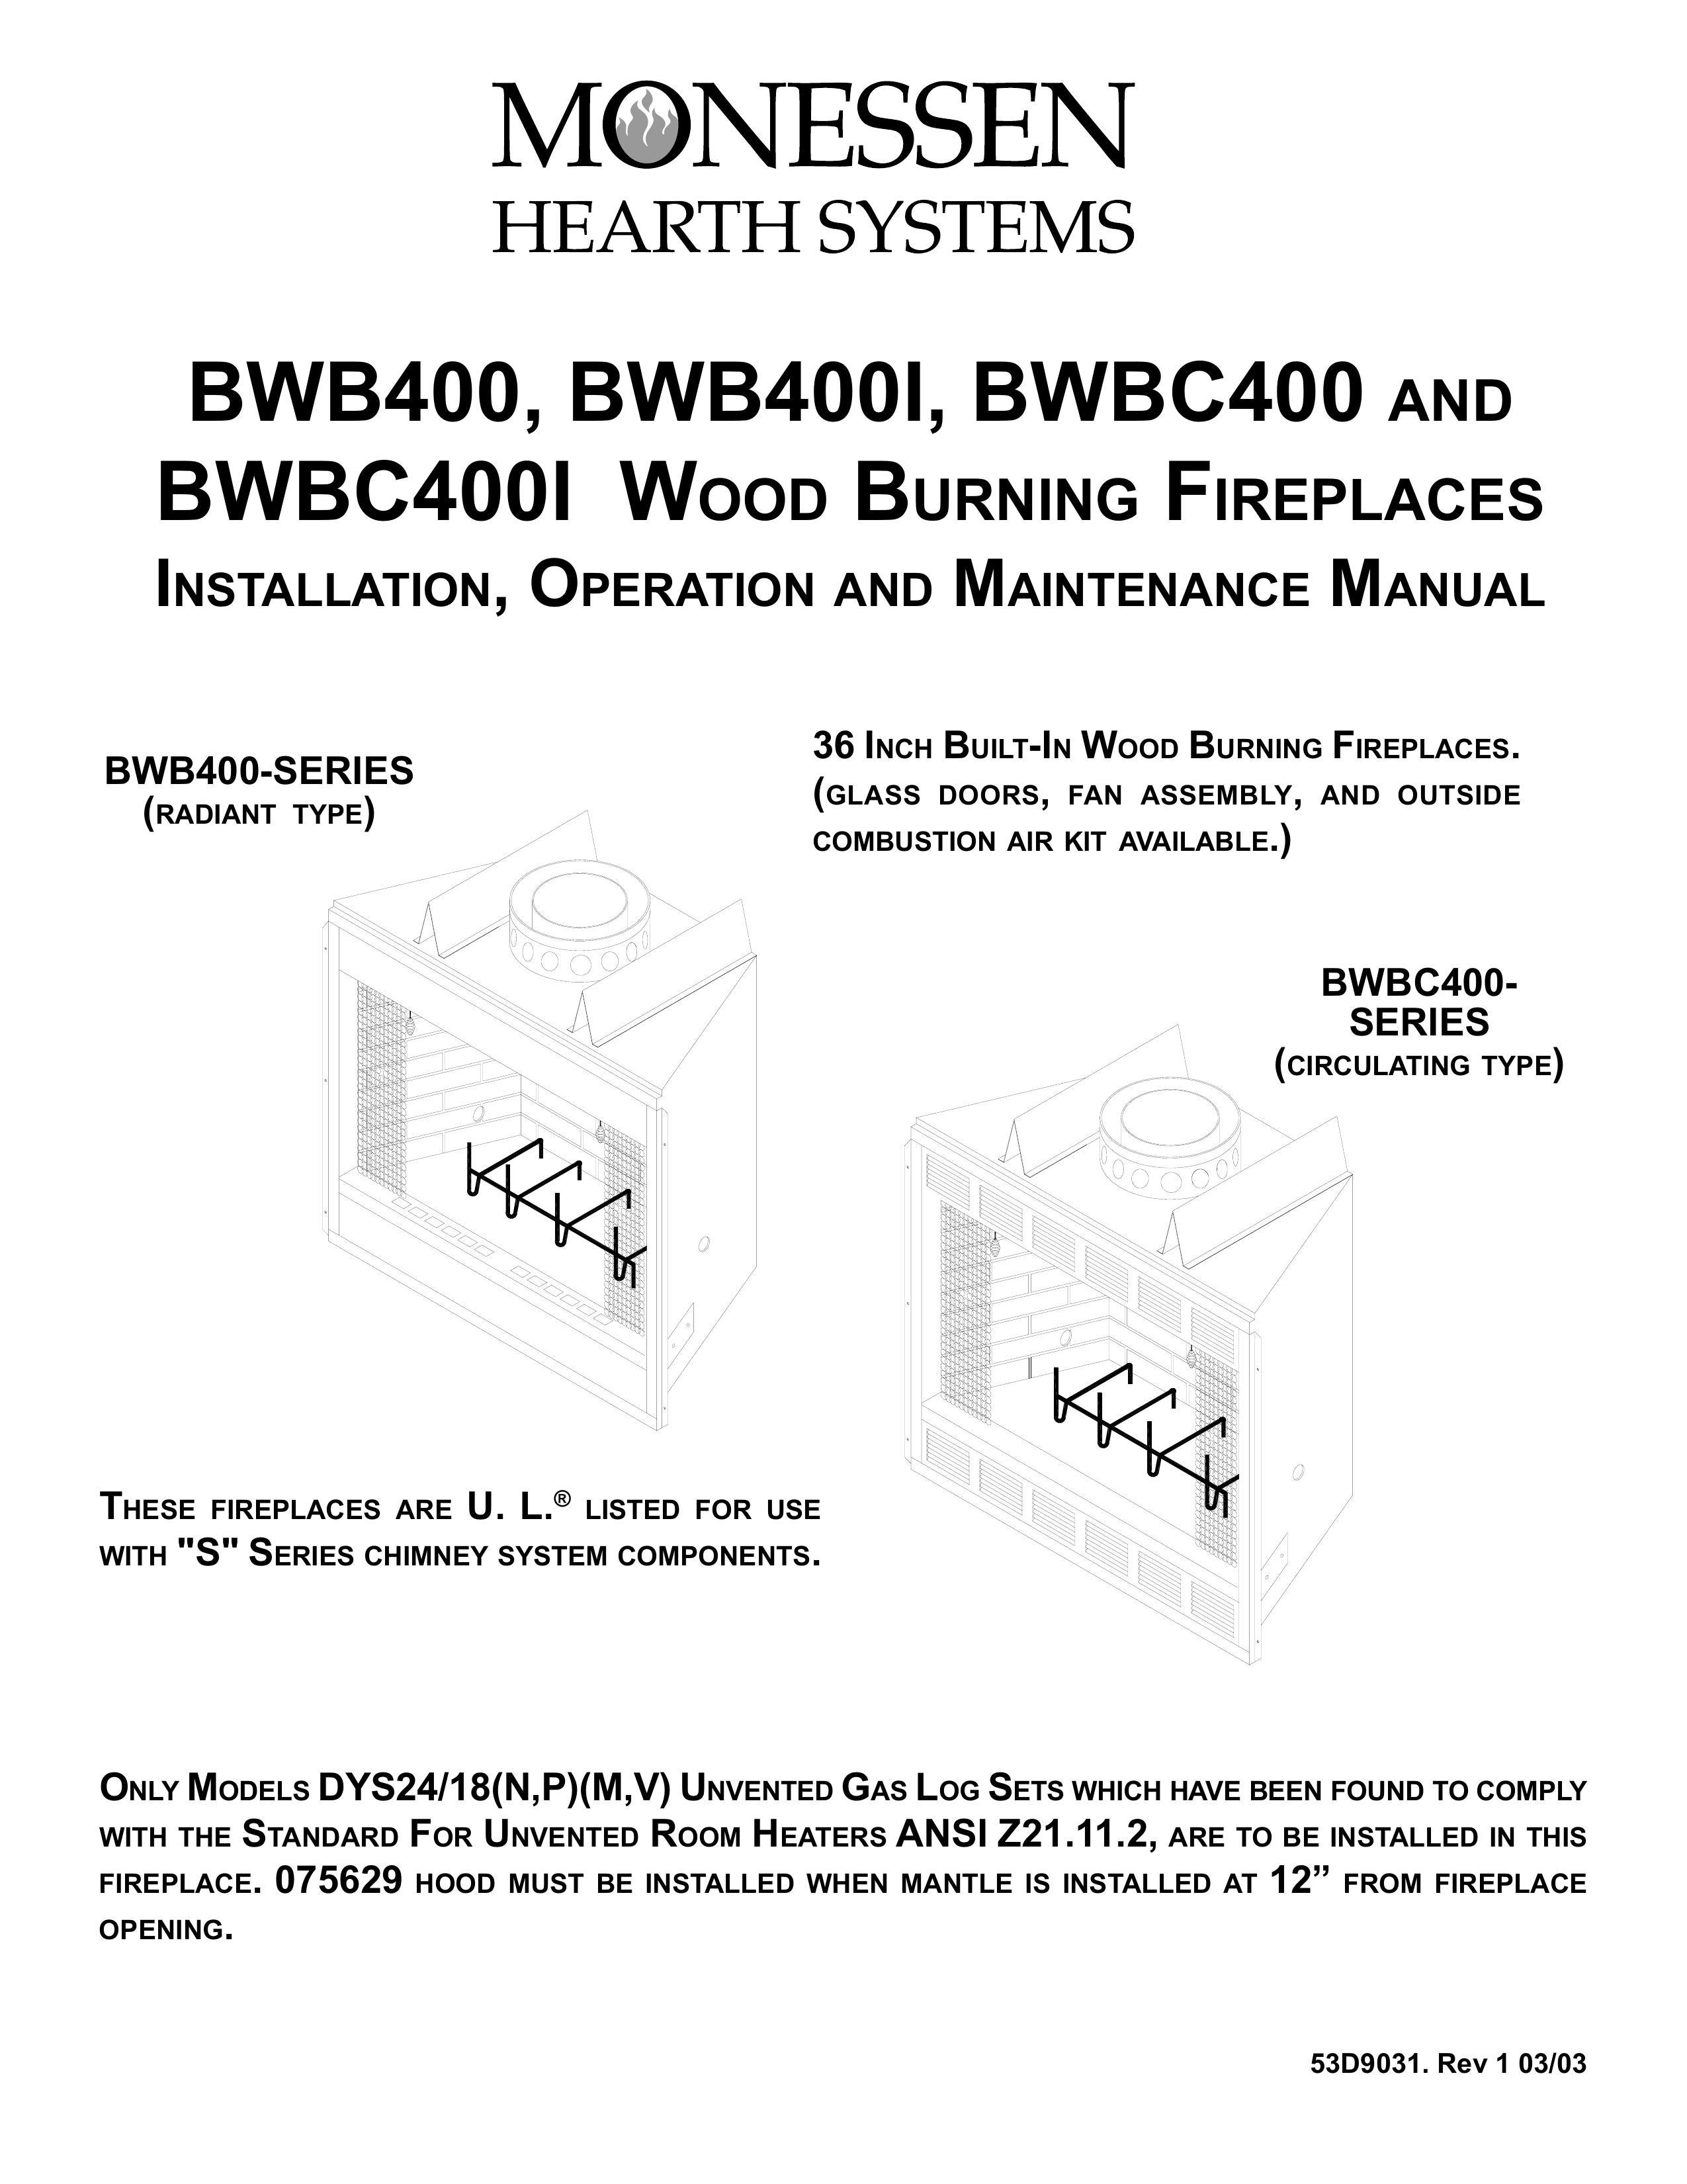 Monessen Hearth BWBC400 Fire Pit User Manual